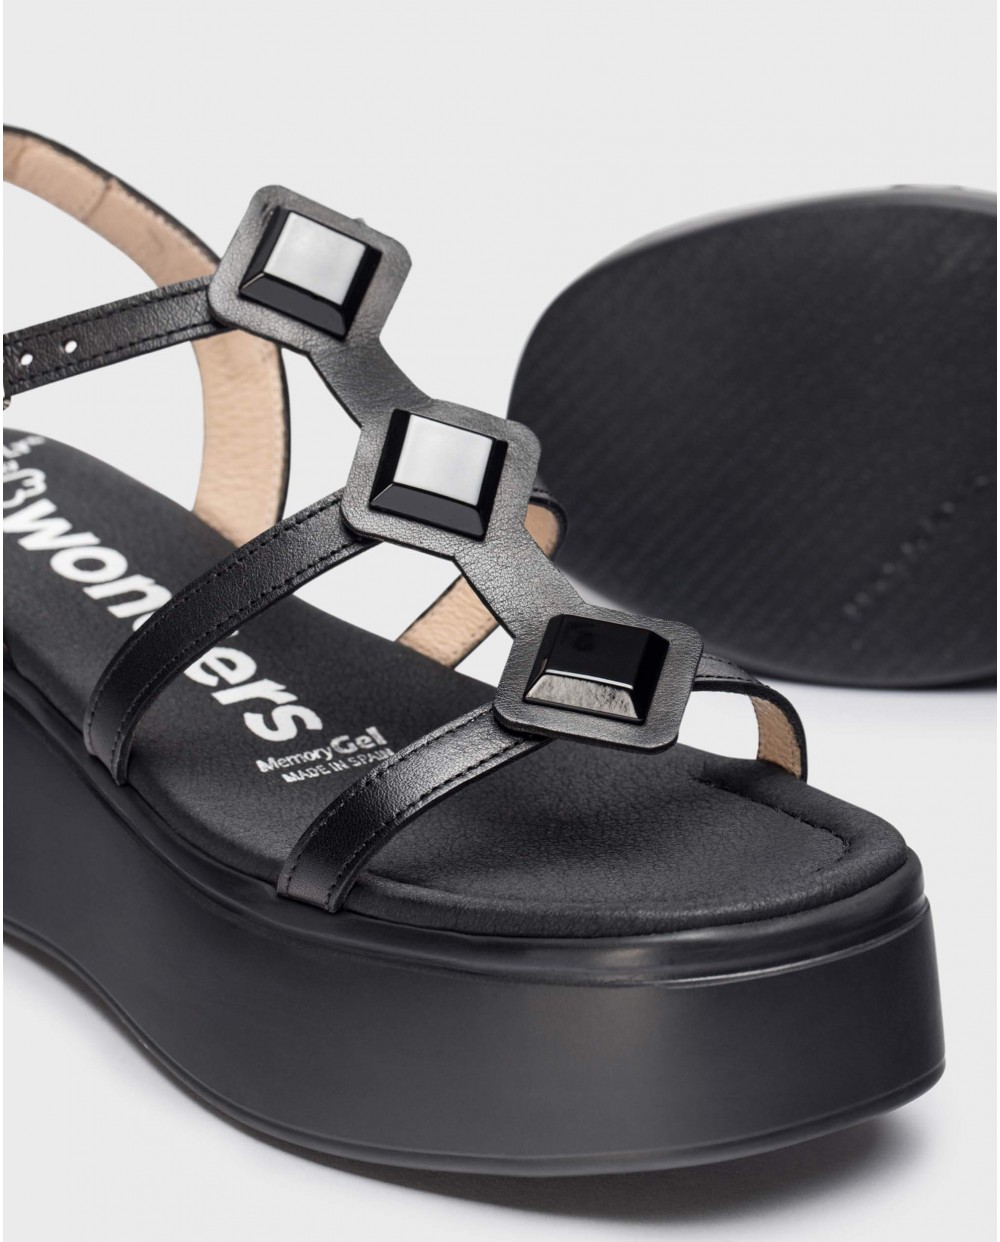 Black Carolina platform sandals